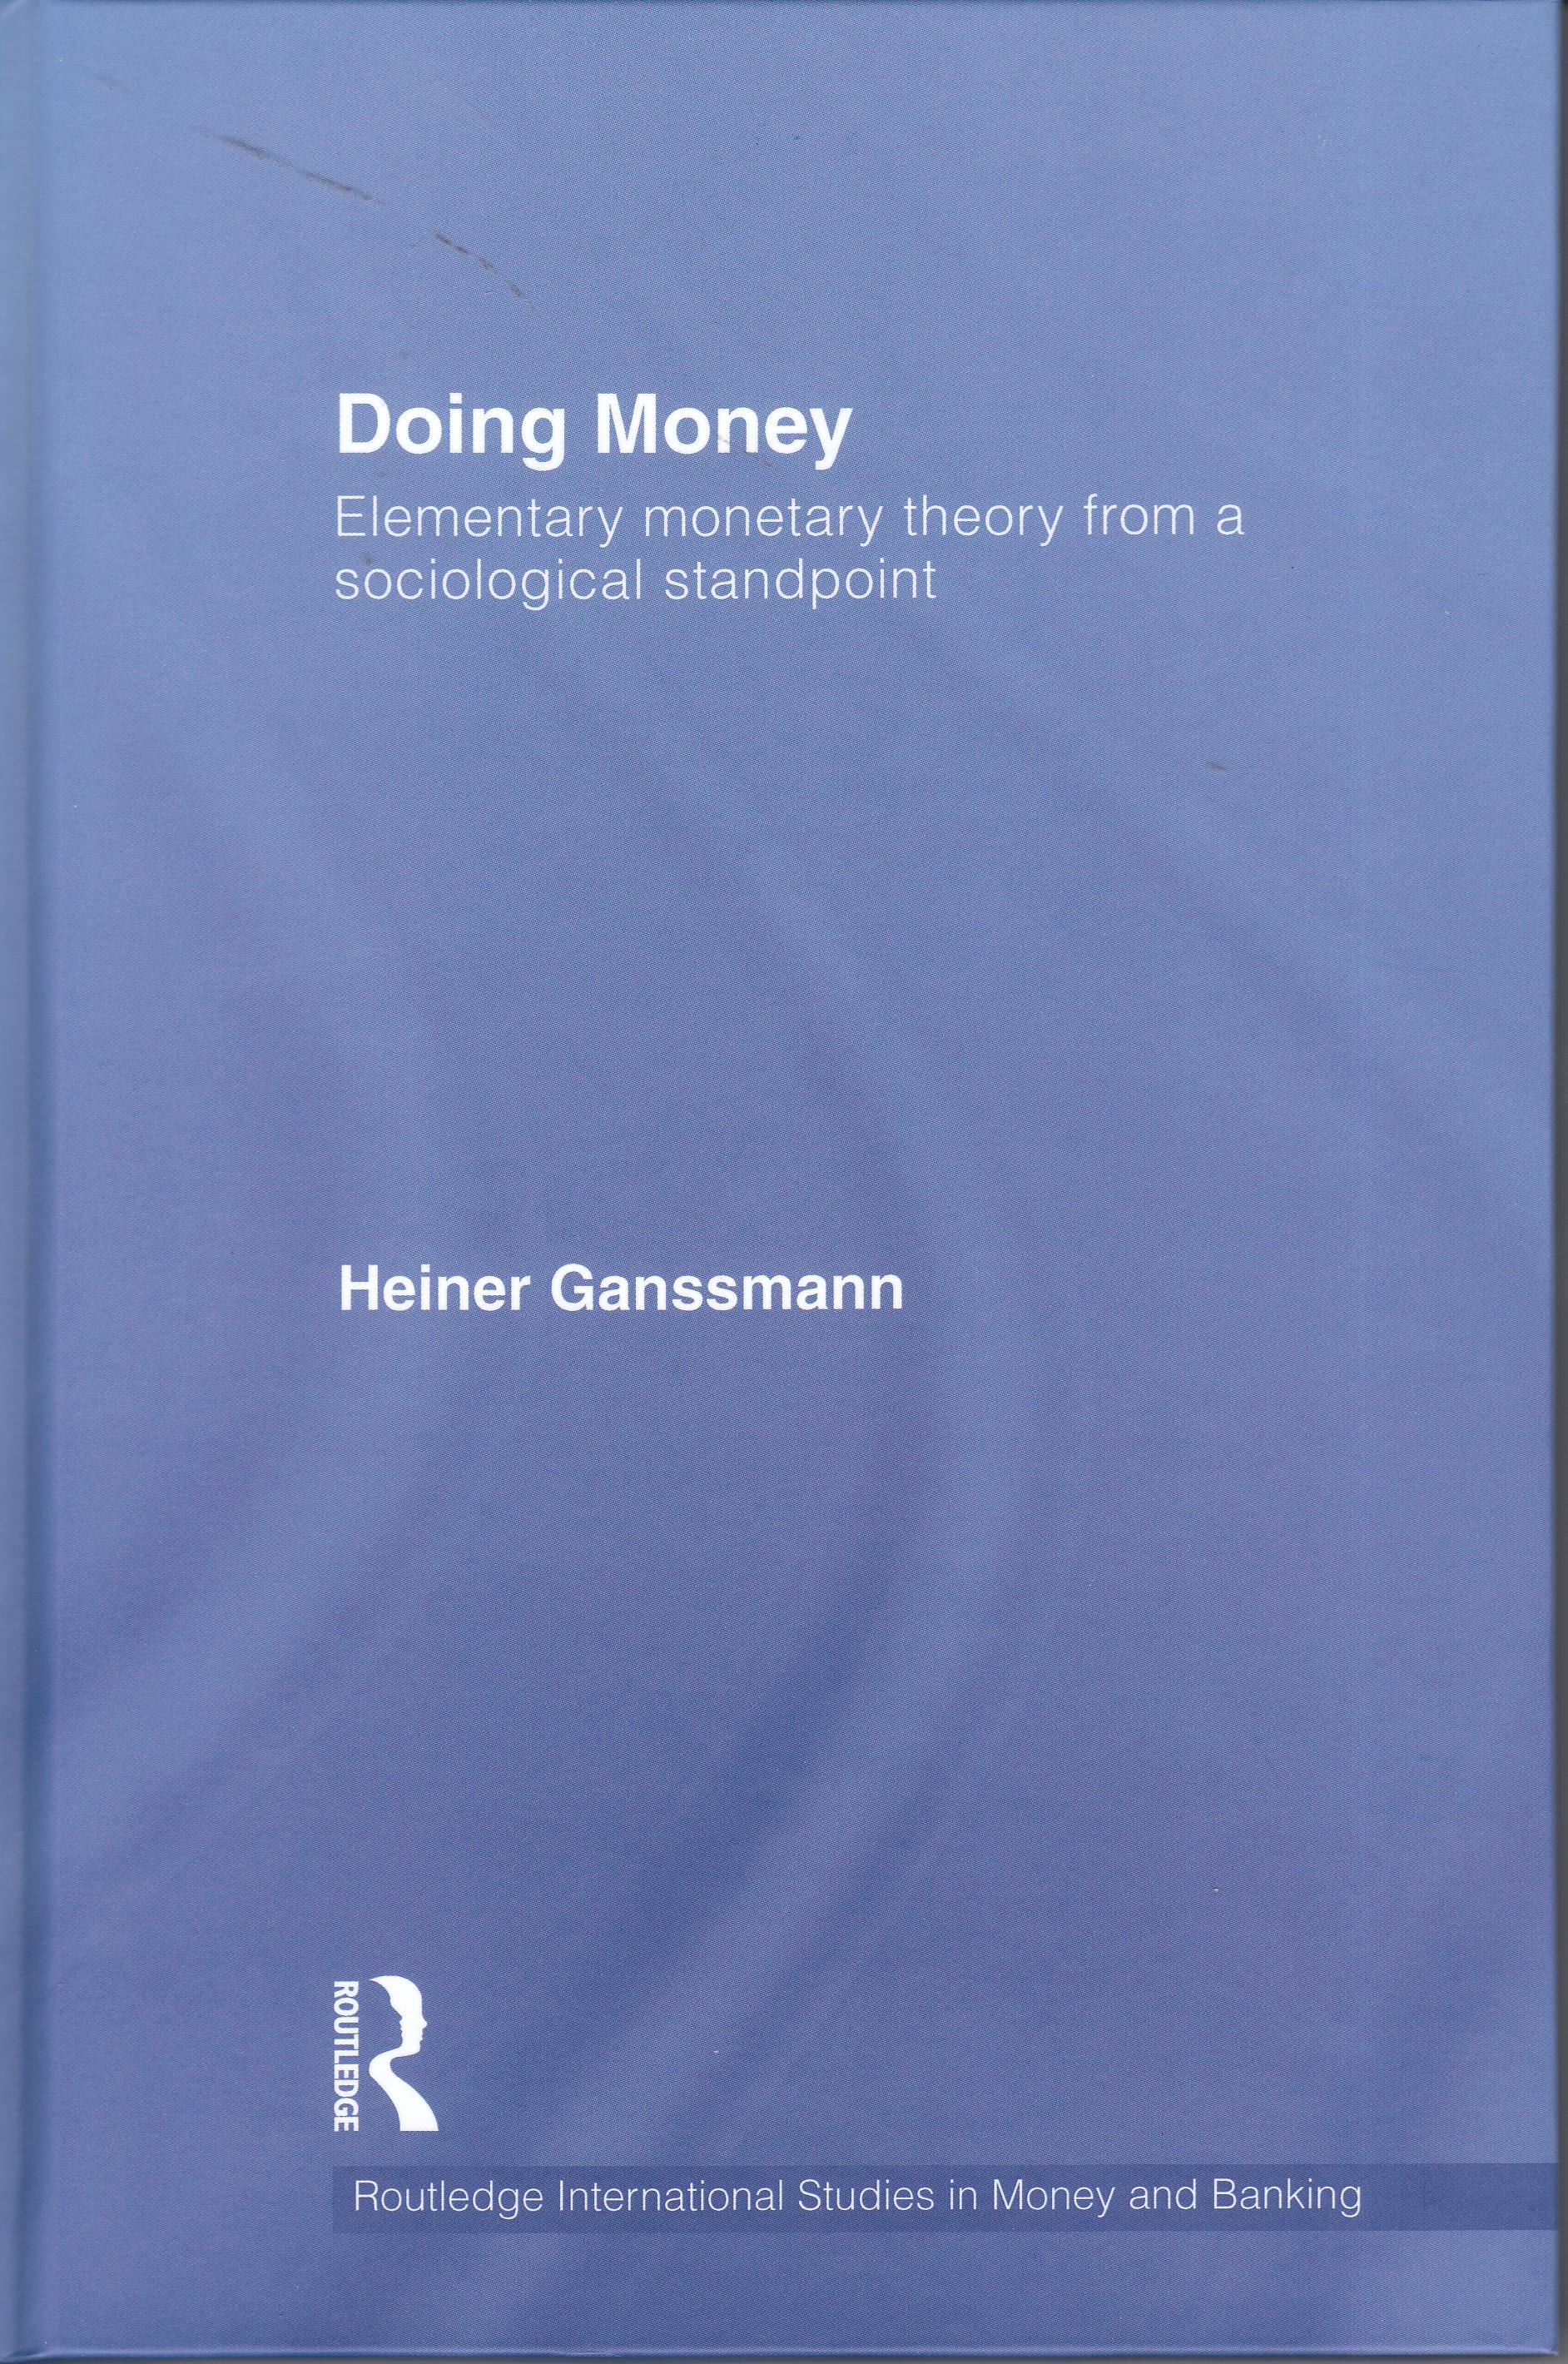 Doing Money "Elementary Monetary Theory from a Sociological Standpoint". Elementary Monetary Theory from a Sociological Standpoint